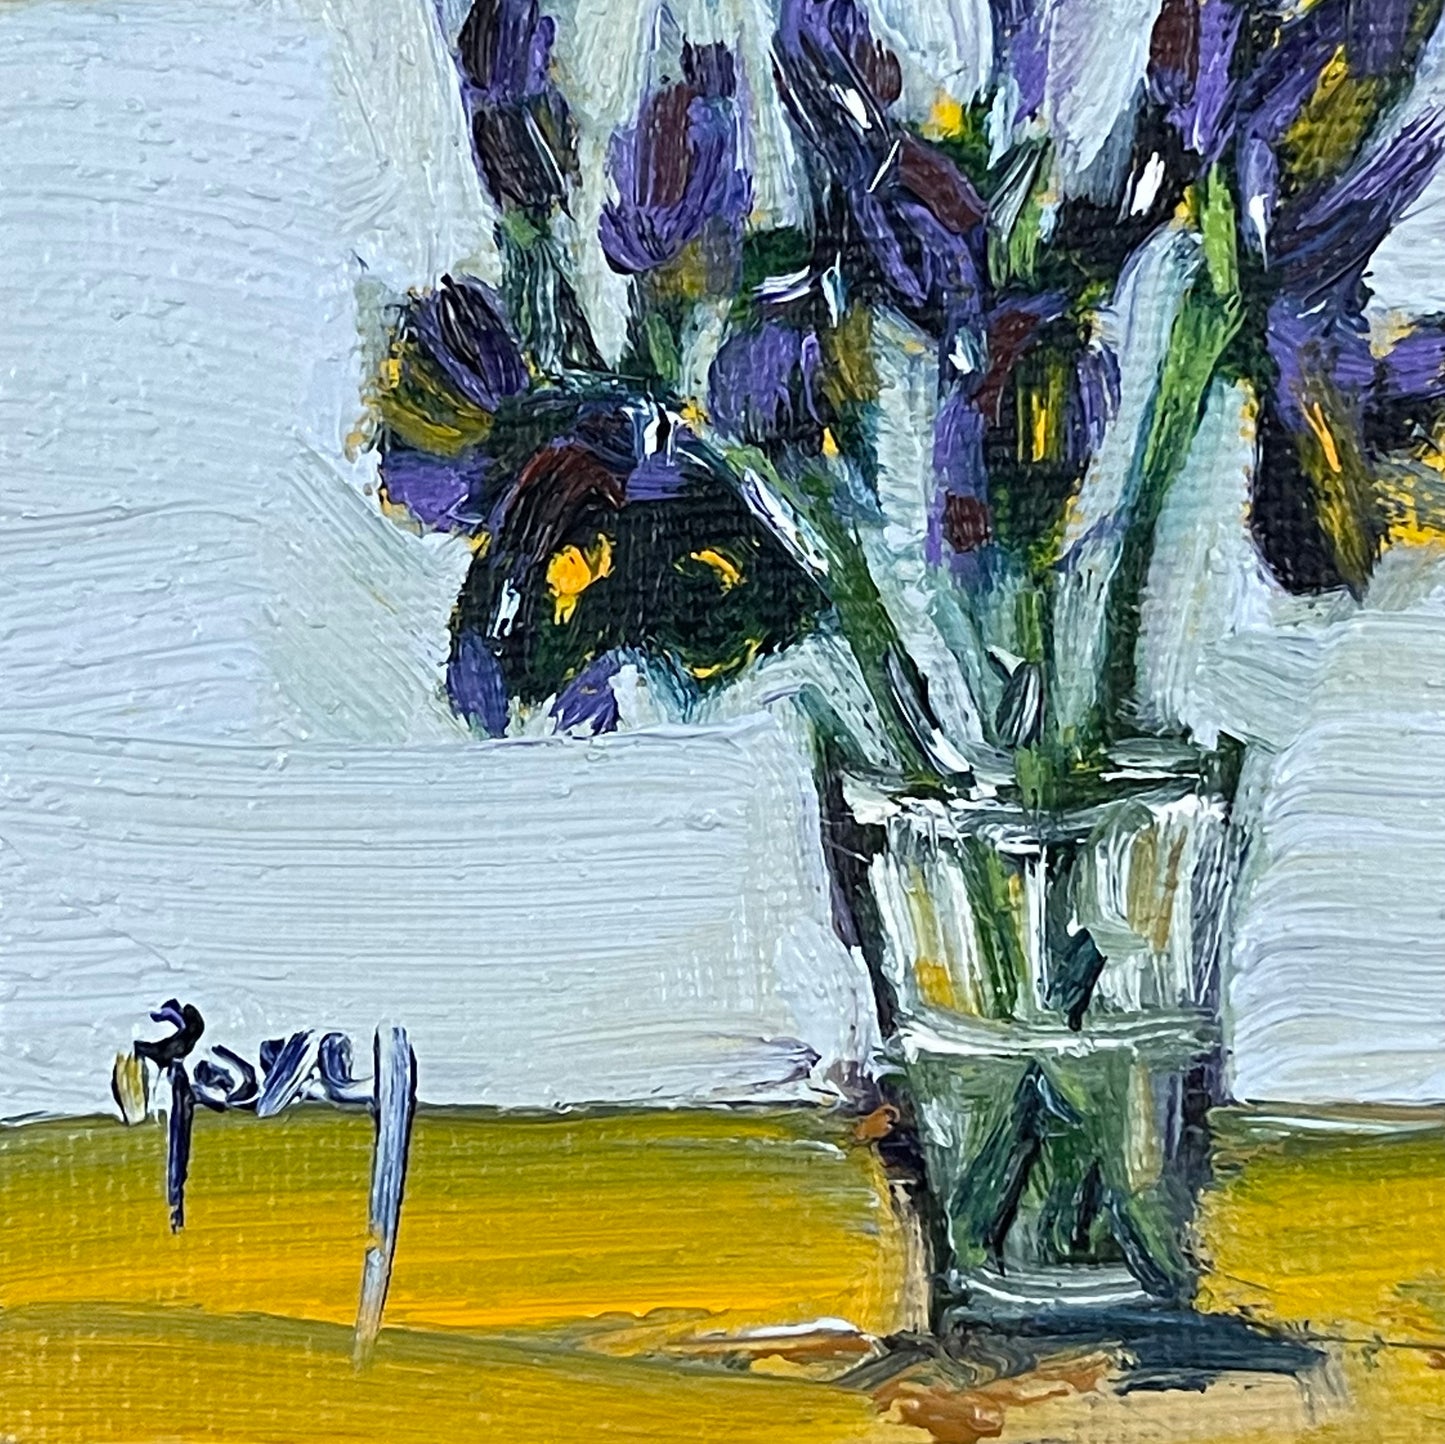 Iris -Pintura al óleo en miniatura original con soporte